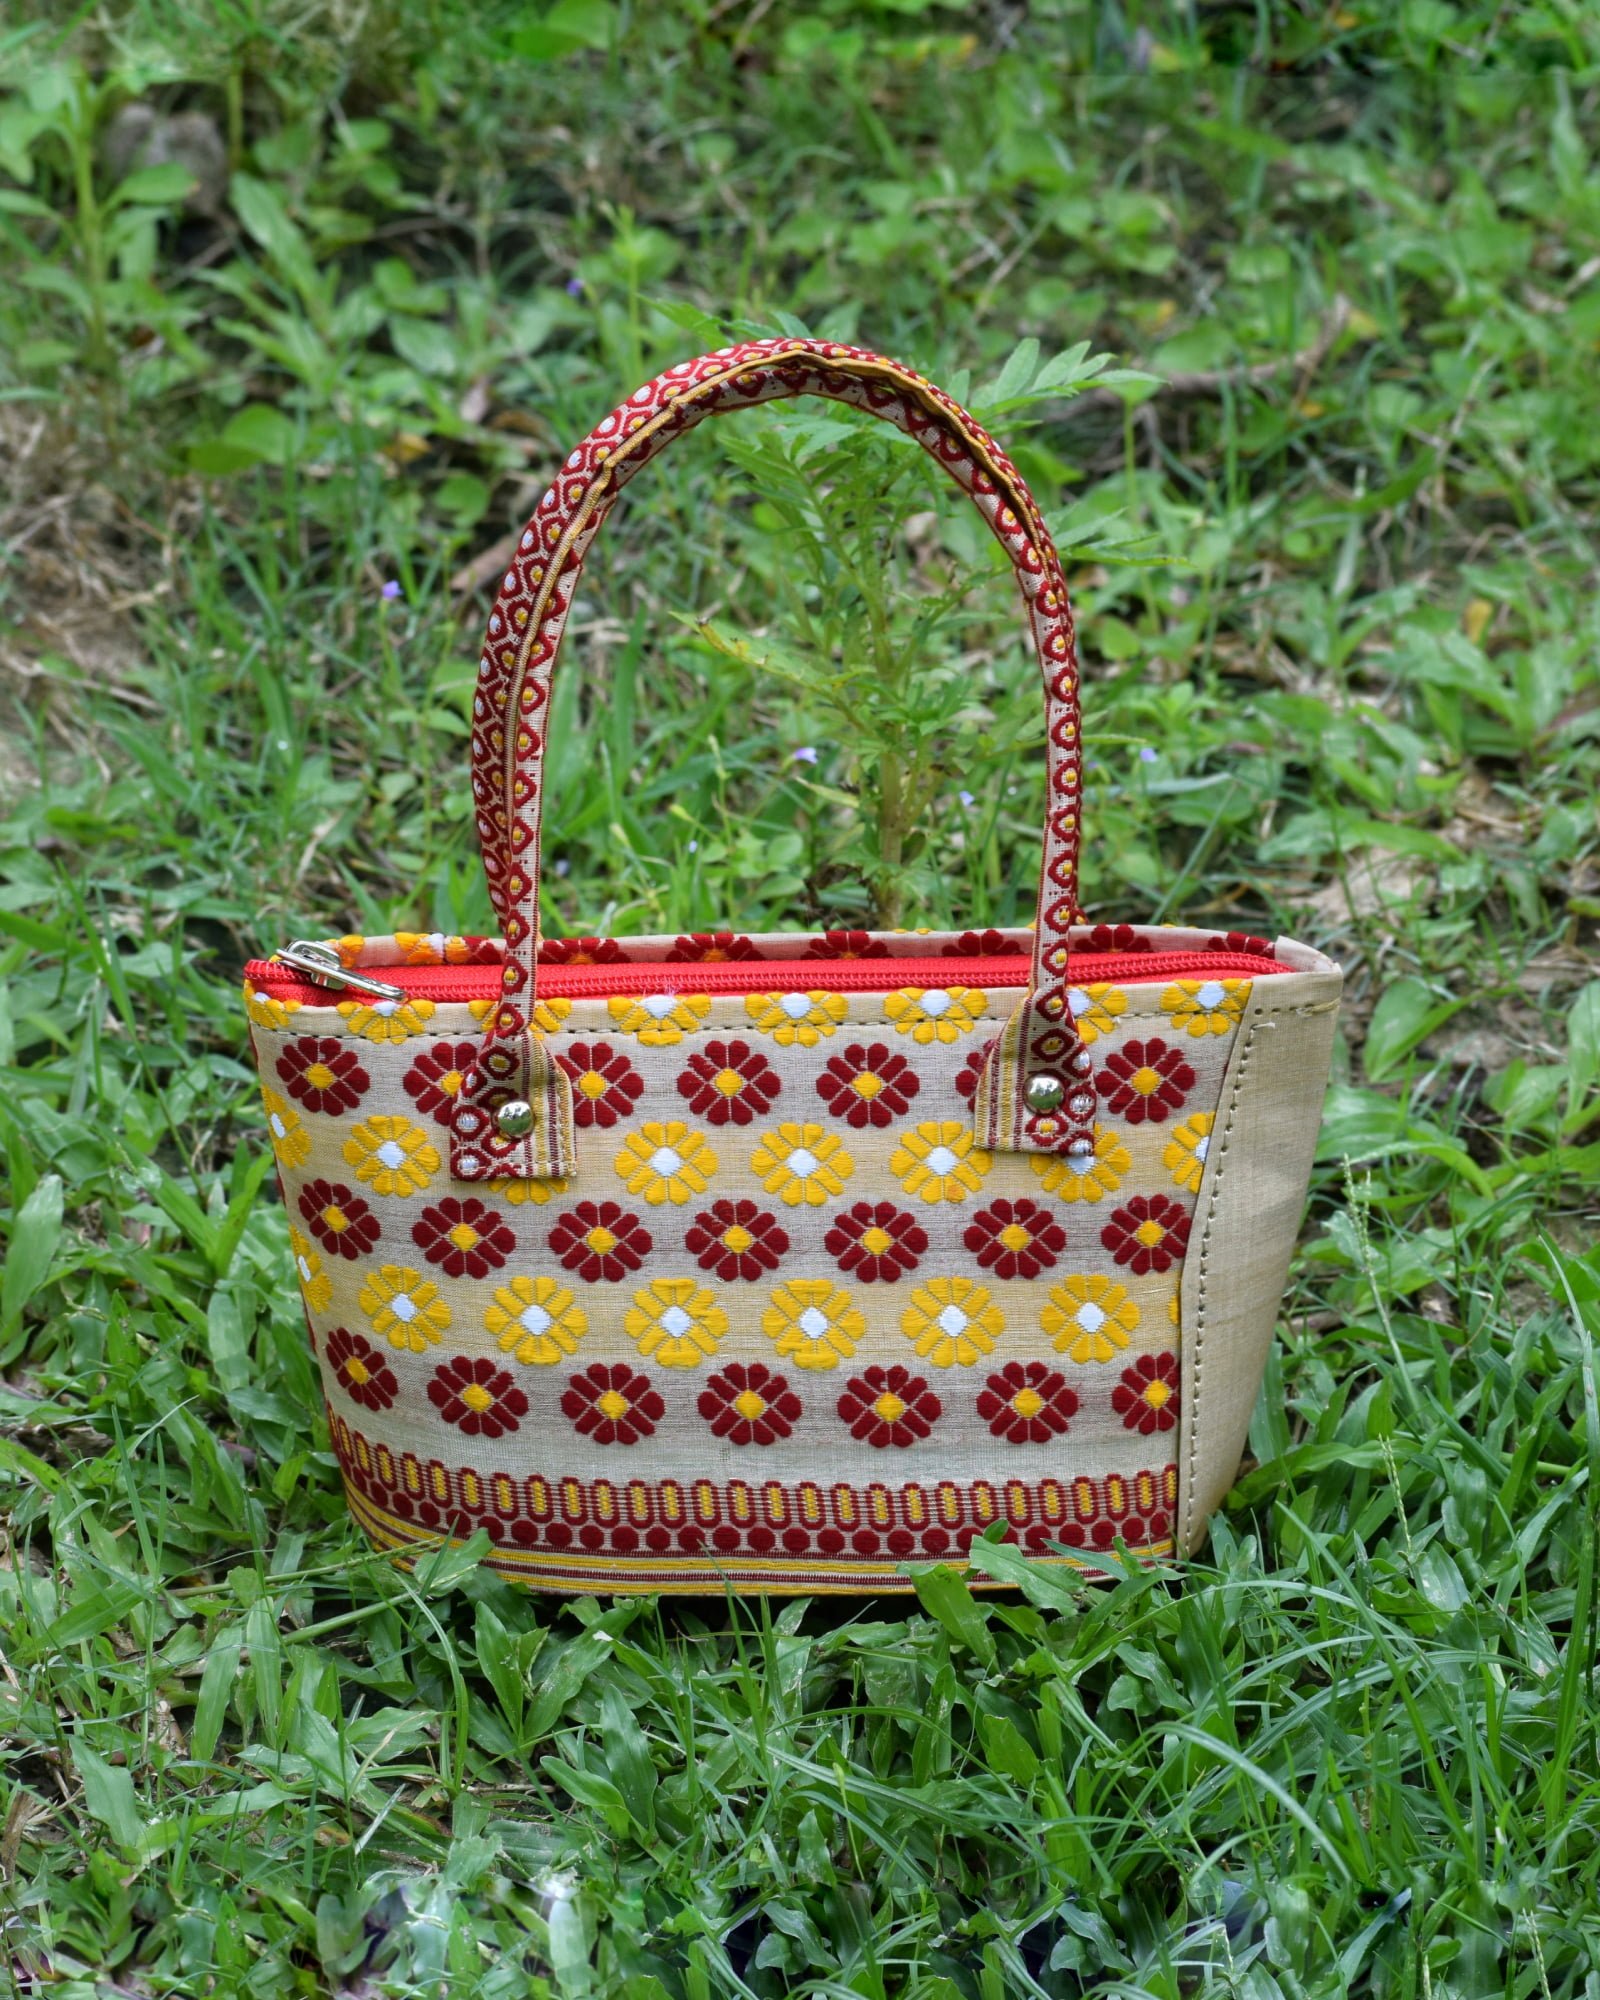 SriShopify Handicrafts Women's Hand purse Banjara Designer Clutch for  Girls, Cotton handmade ladies wallet (Medium, Original Mirrors Beads and  Thread Work), Traditional clutch